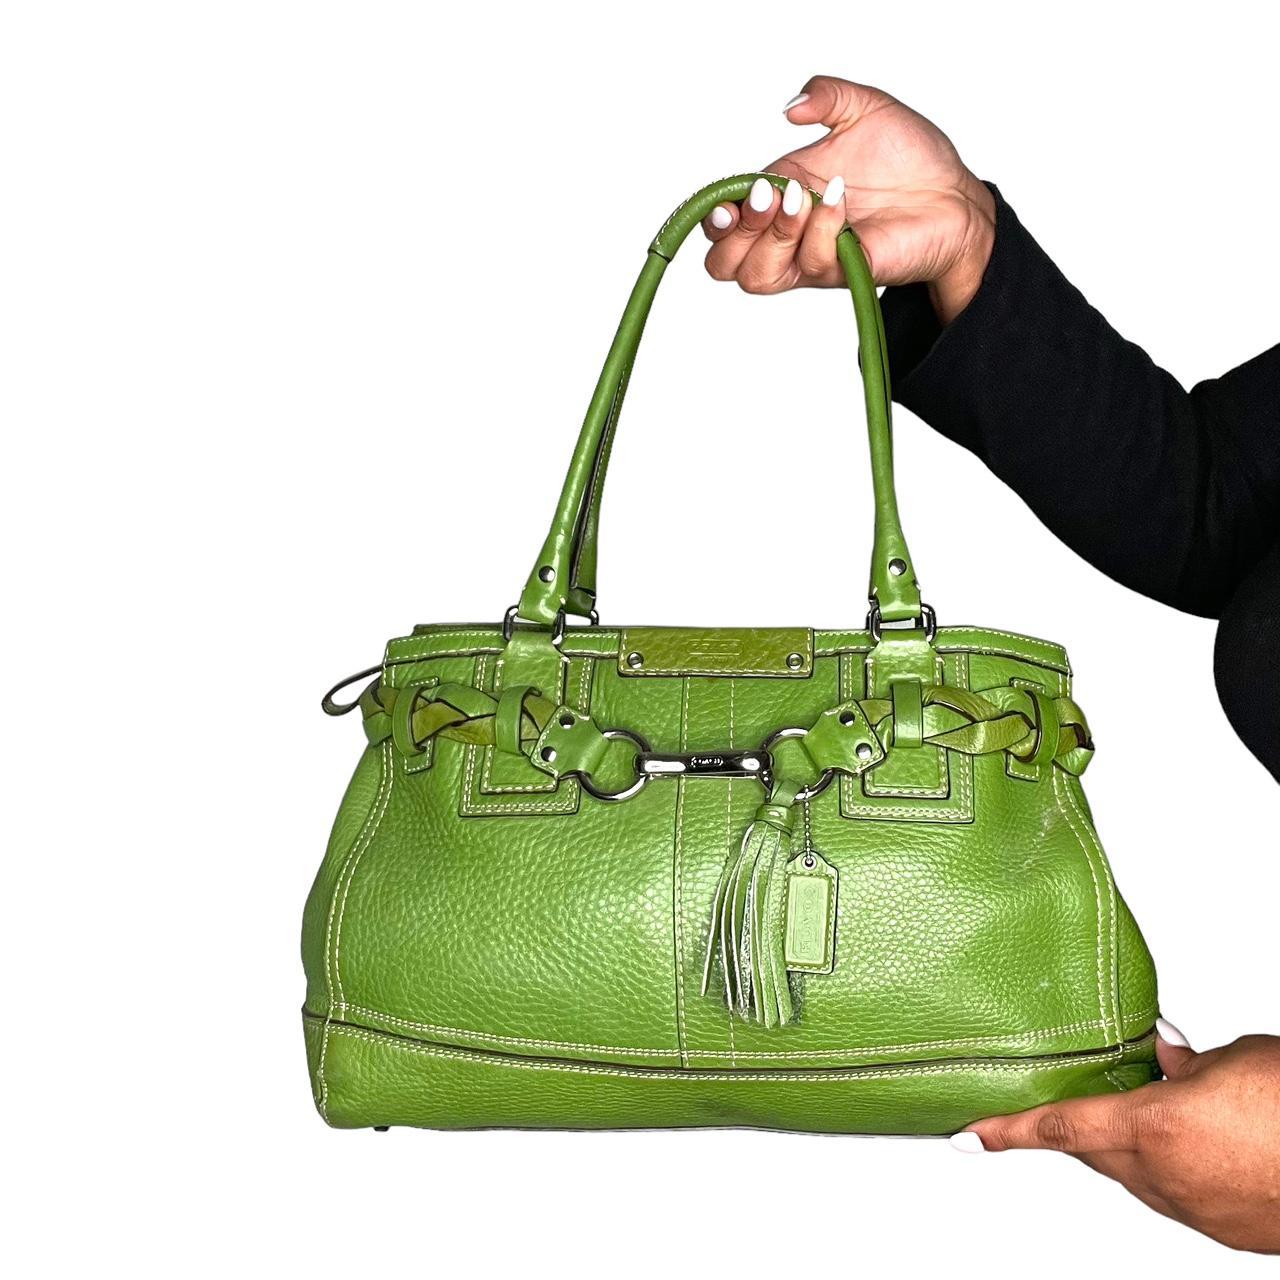 Lime green coach purse - Gem